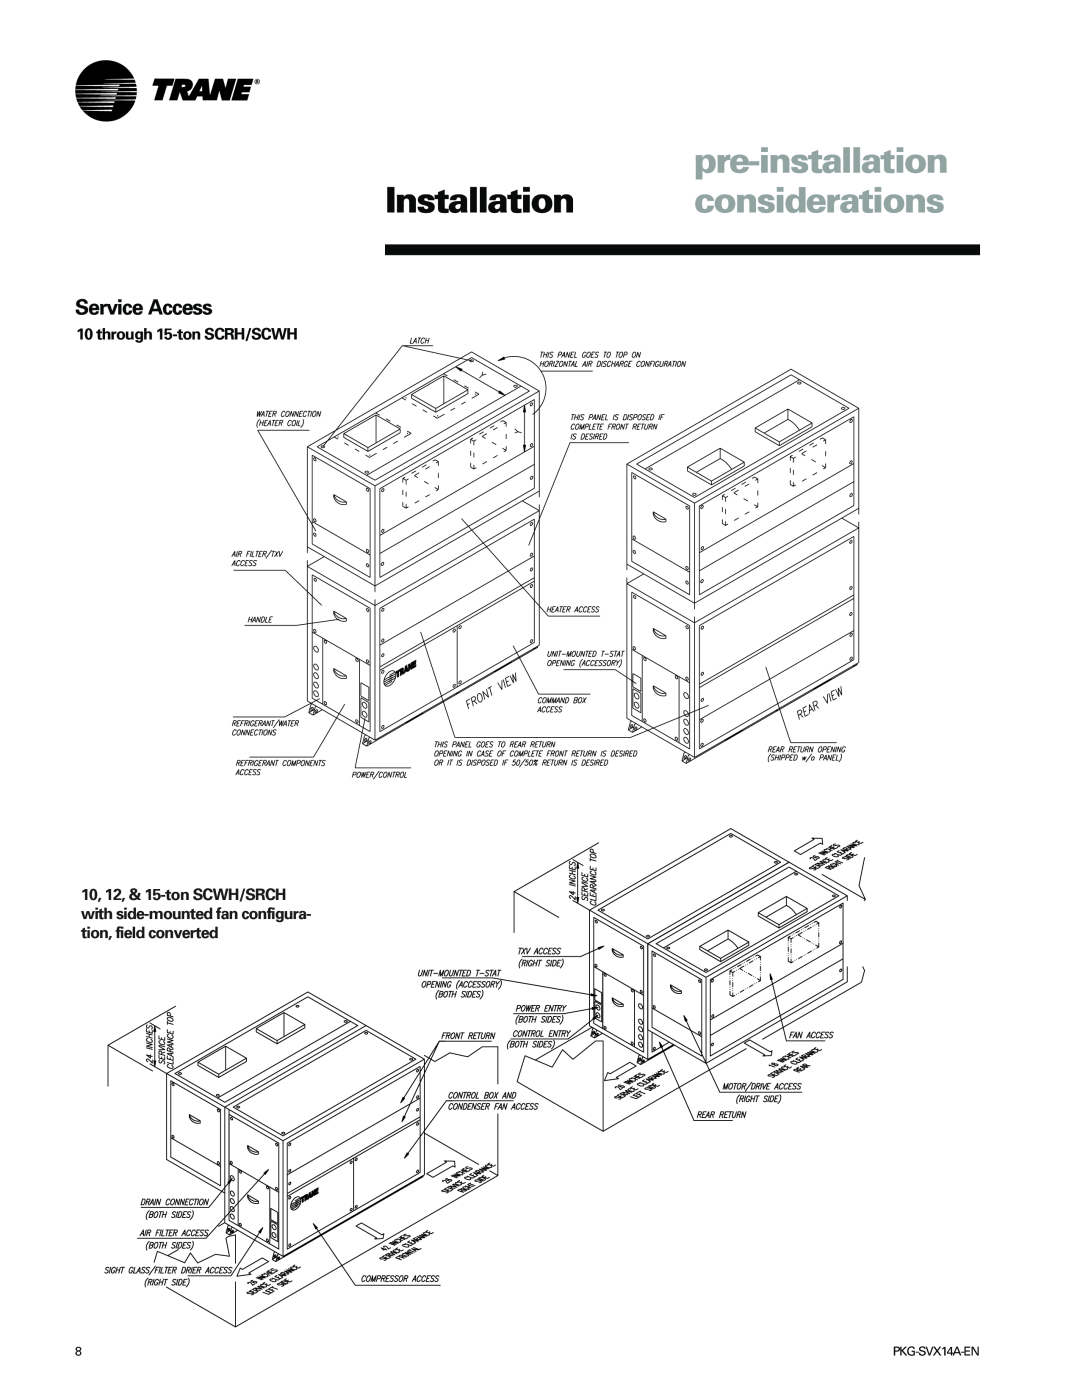 Trane manual pre-installation Installation considerations, Service Access, through 15-tonSCRH/SCWH 